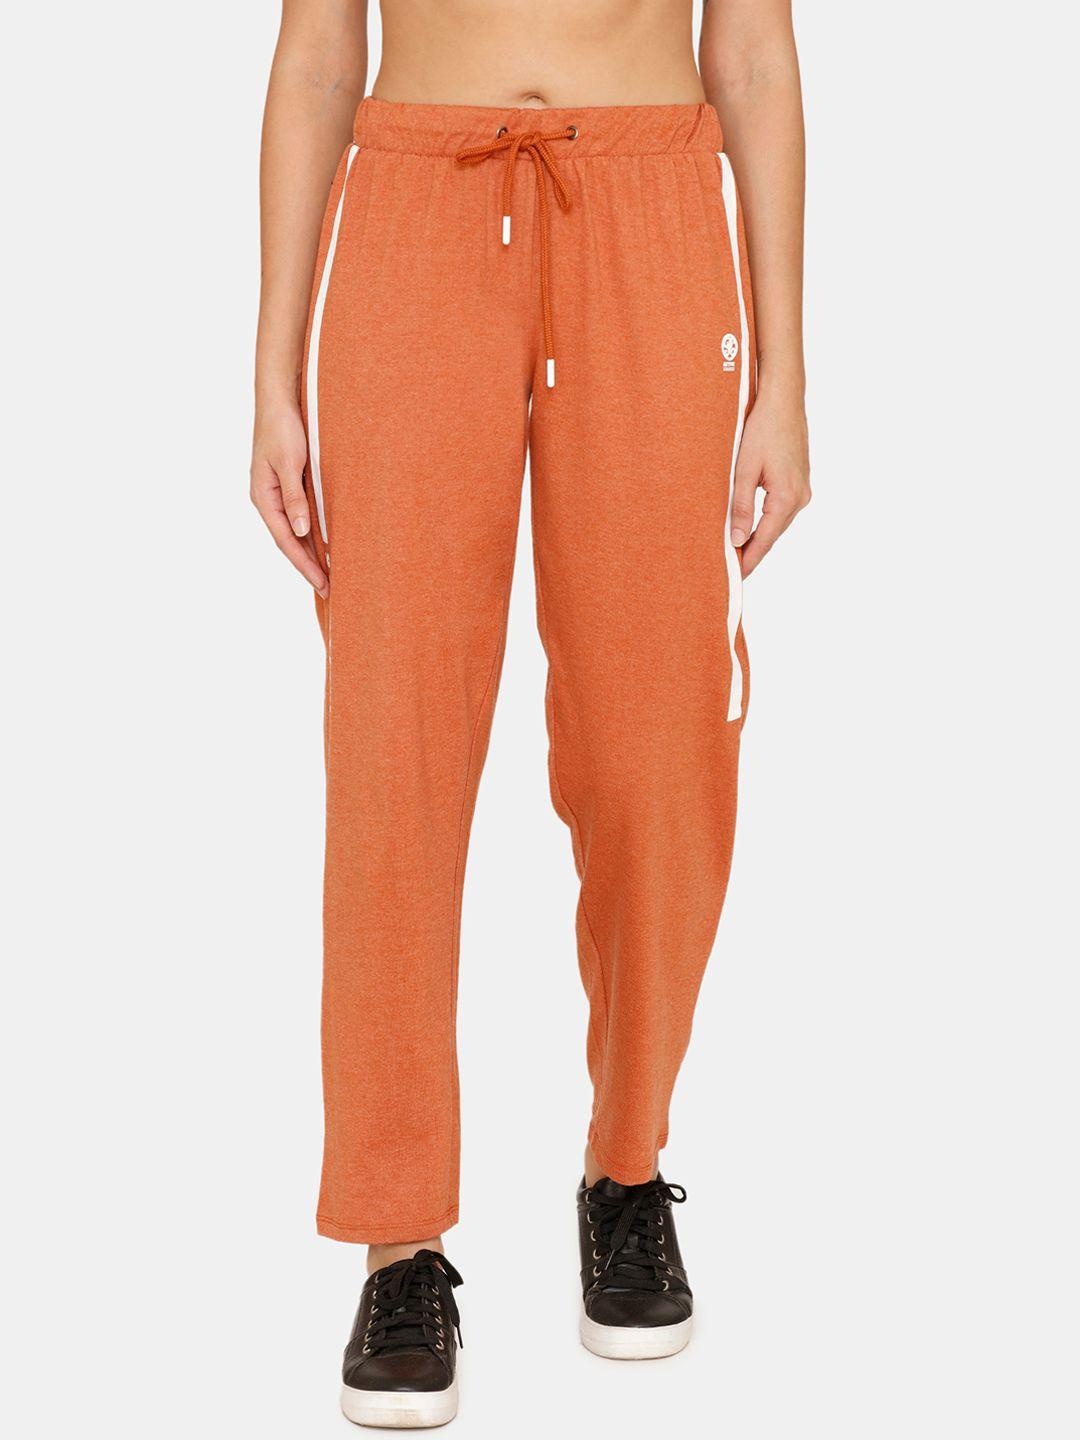 rosaline by zivame women orange solid track pants